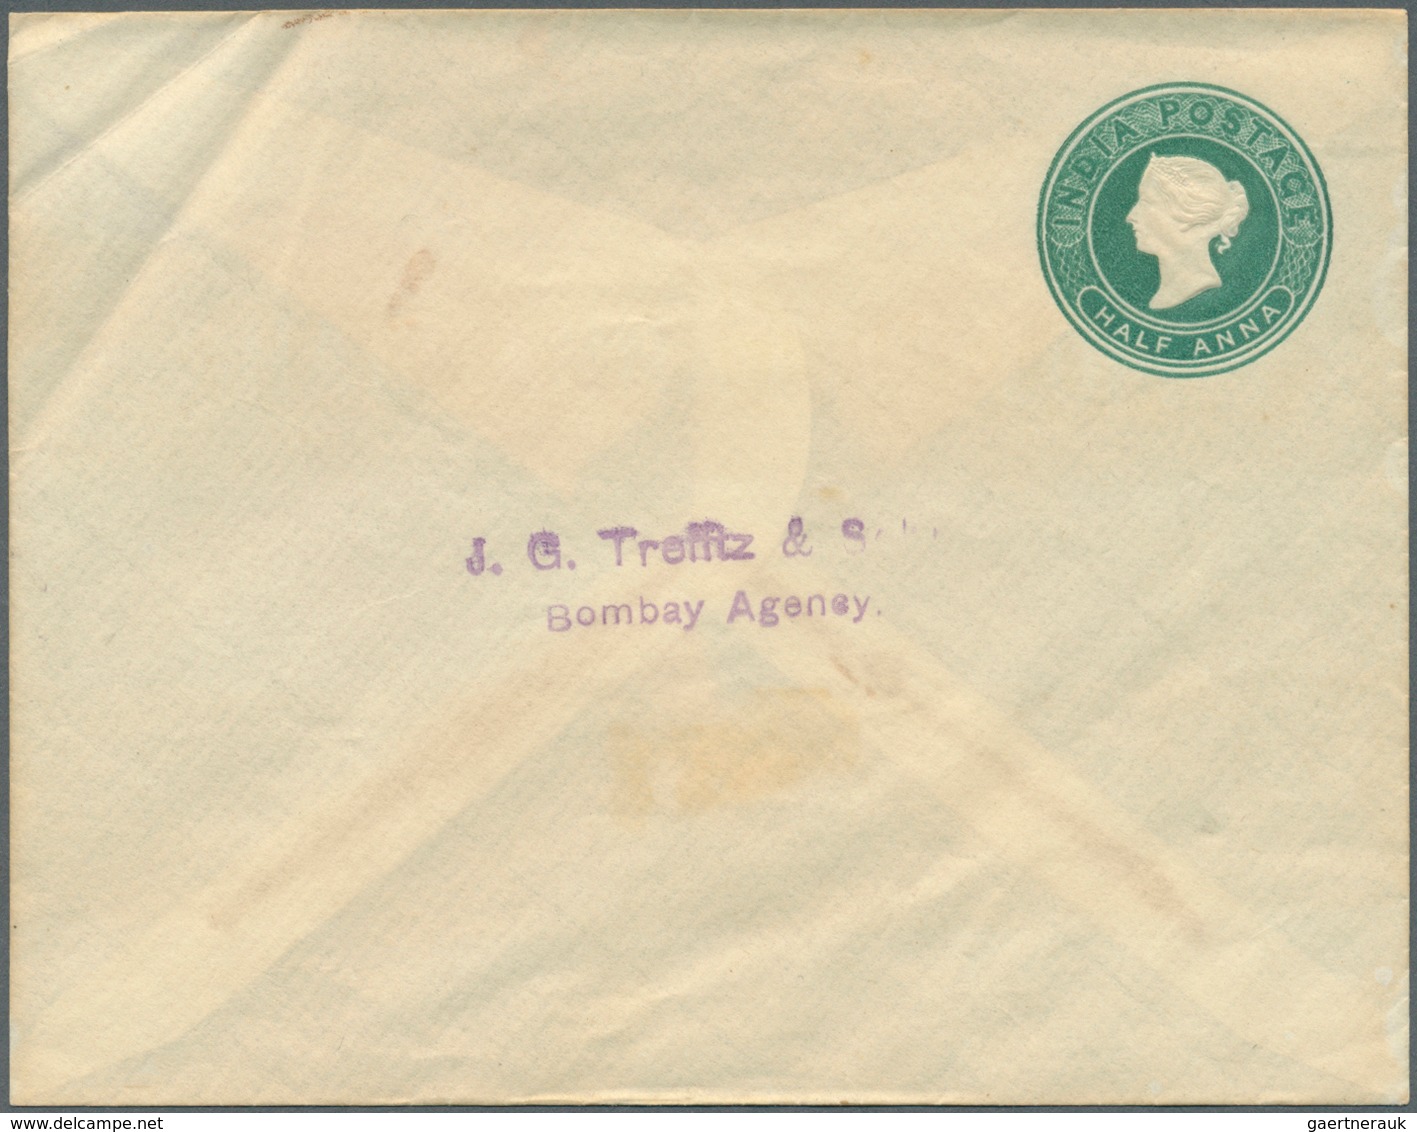 Indien - Ganzsachen: 1850's-1970's ca.: Collection of Indian postal stationery envelopes, letter she